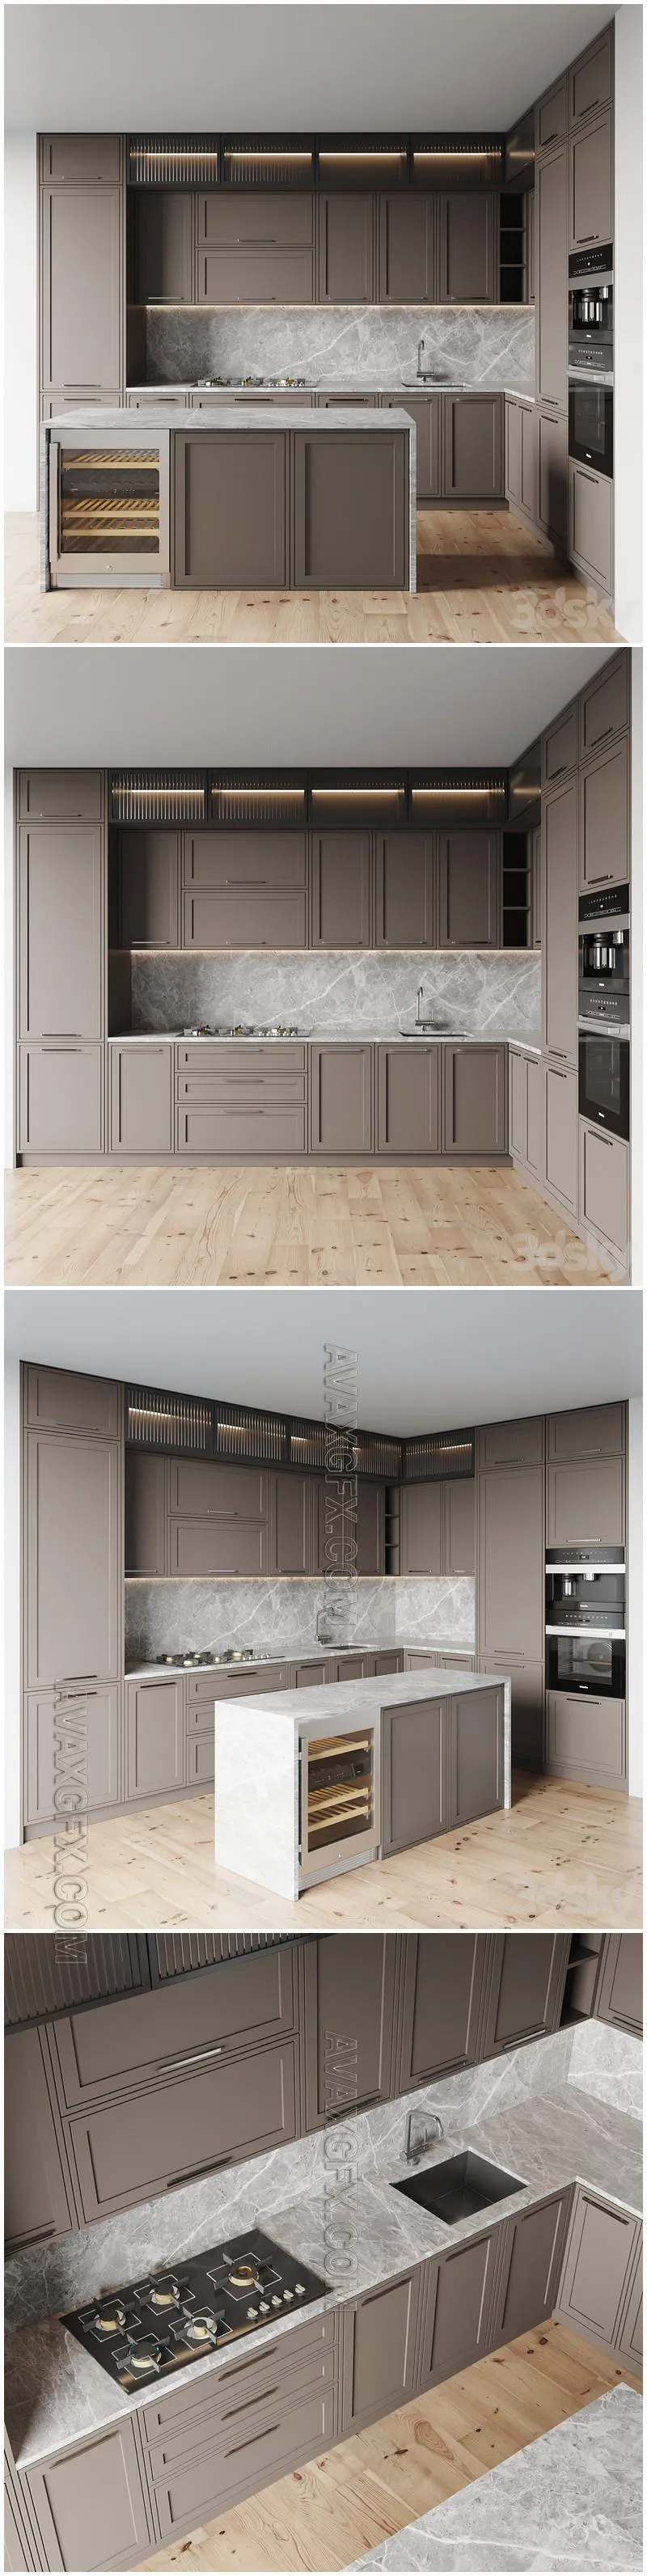 Kitchen 0102 - 3D Model